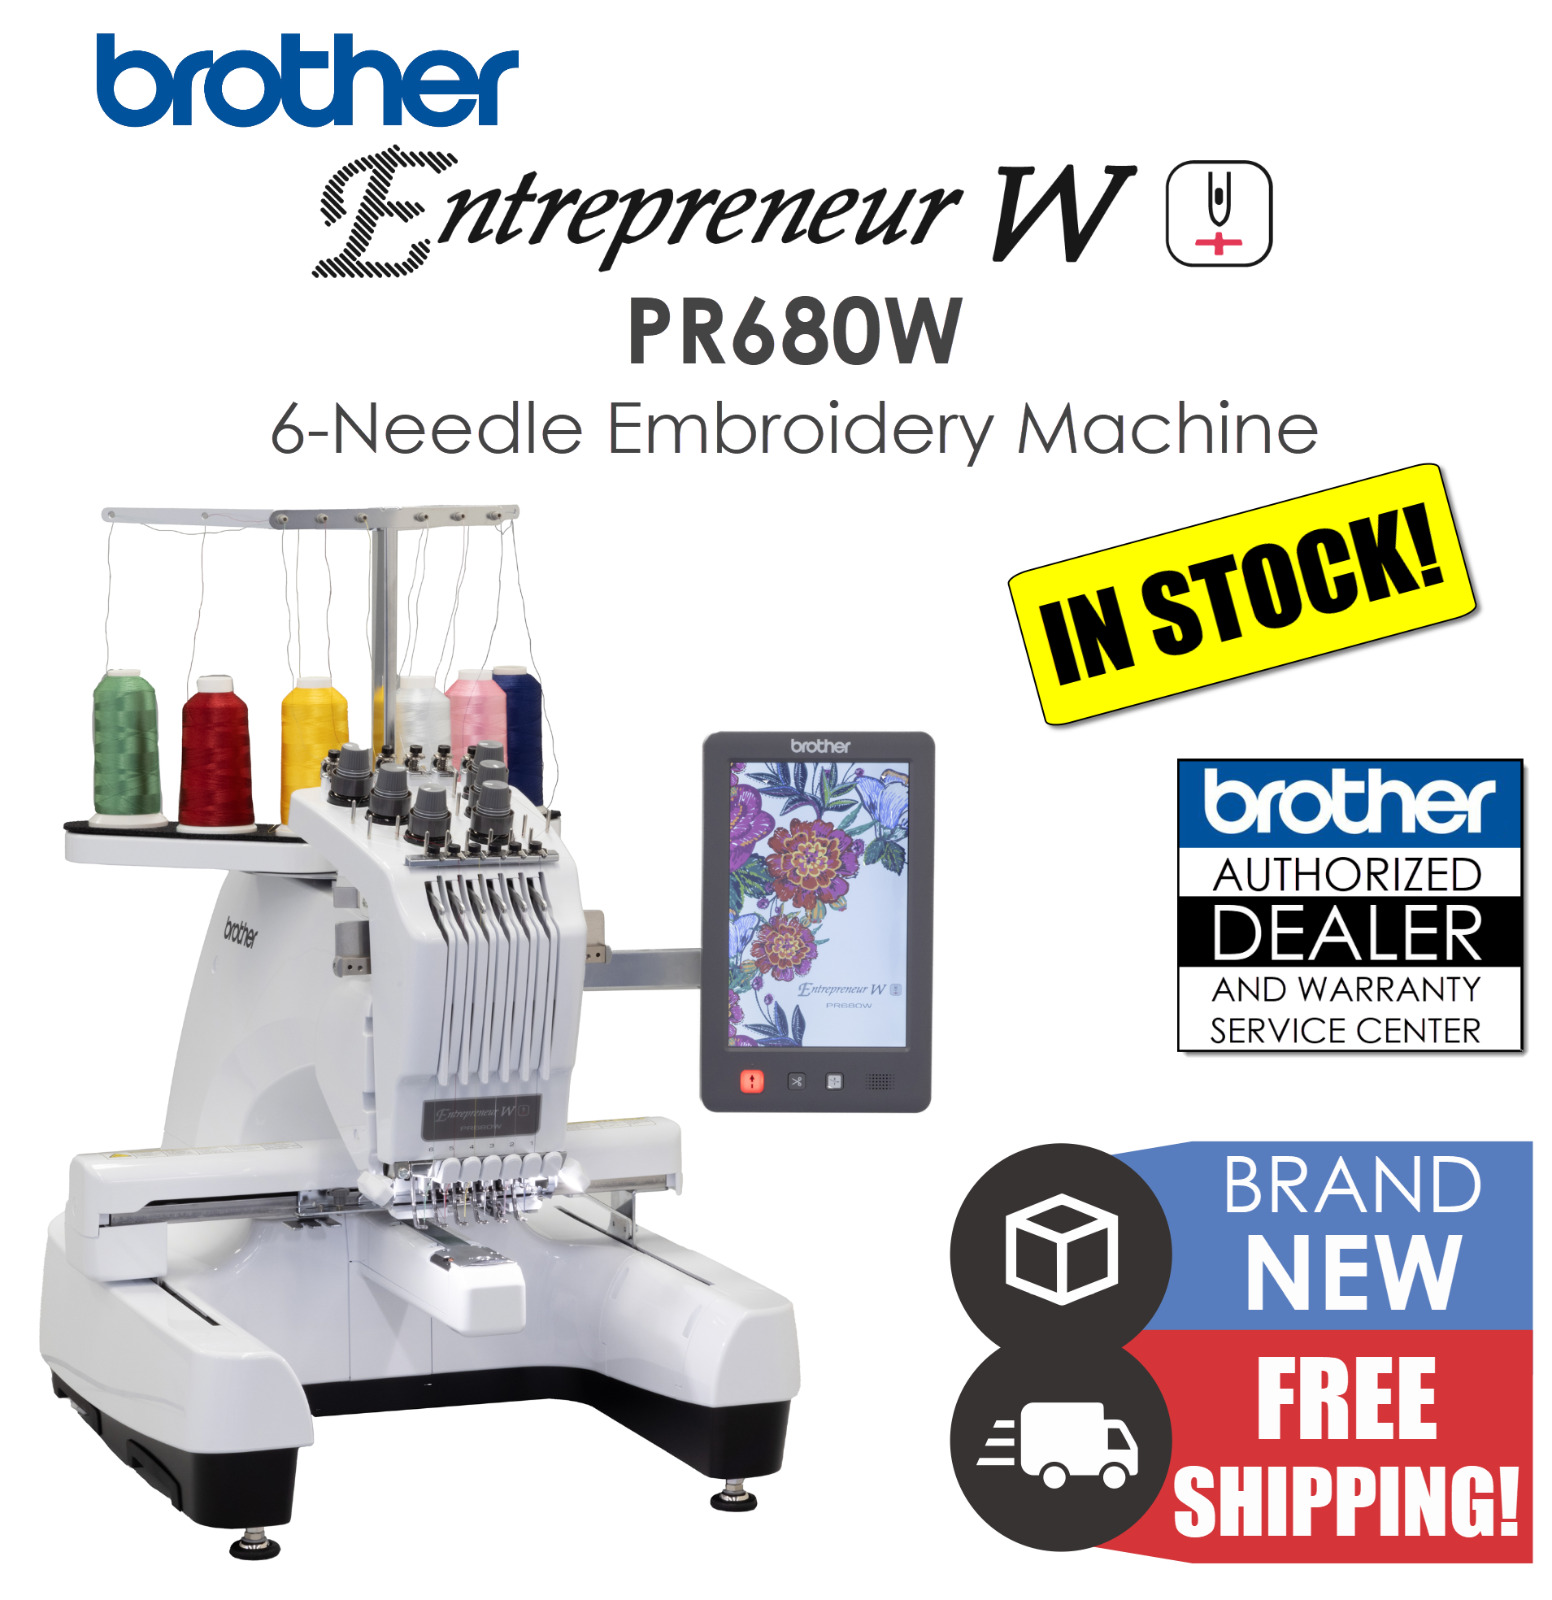 Brother Pr680w Entrepreneur W Computerized 6-needle Embroidery Machine | New